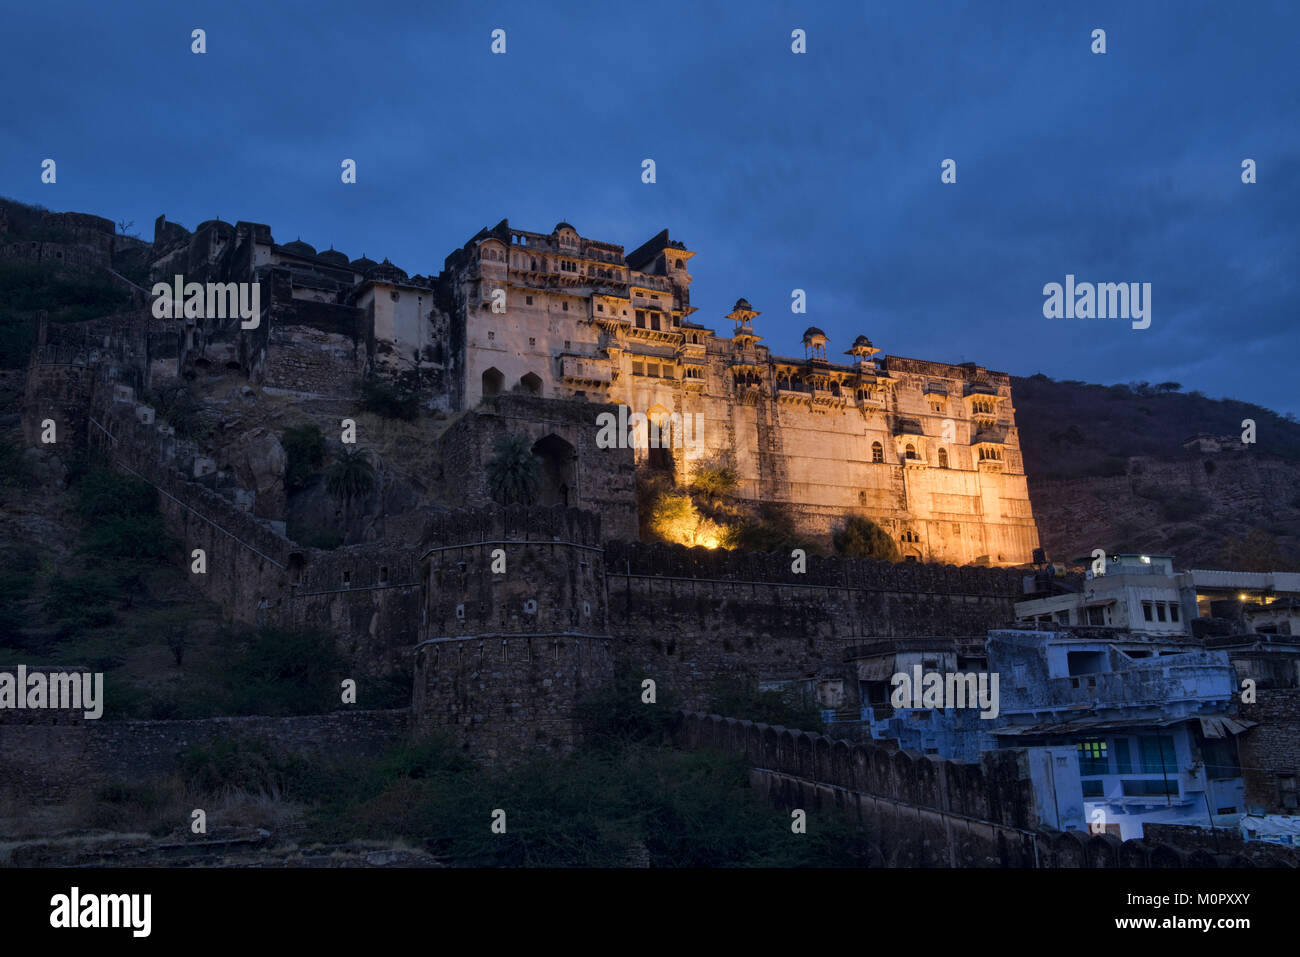 The atmospheric ruined Bundi Palace and Taragarh Fort at night, Rajasthan, India Stock Photo